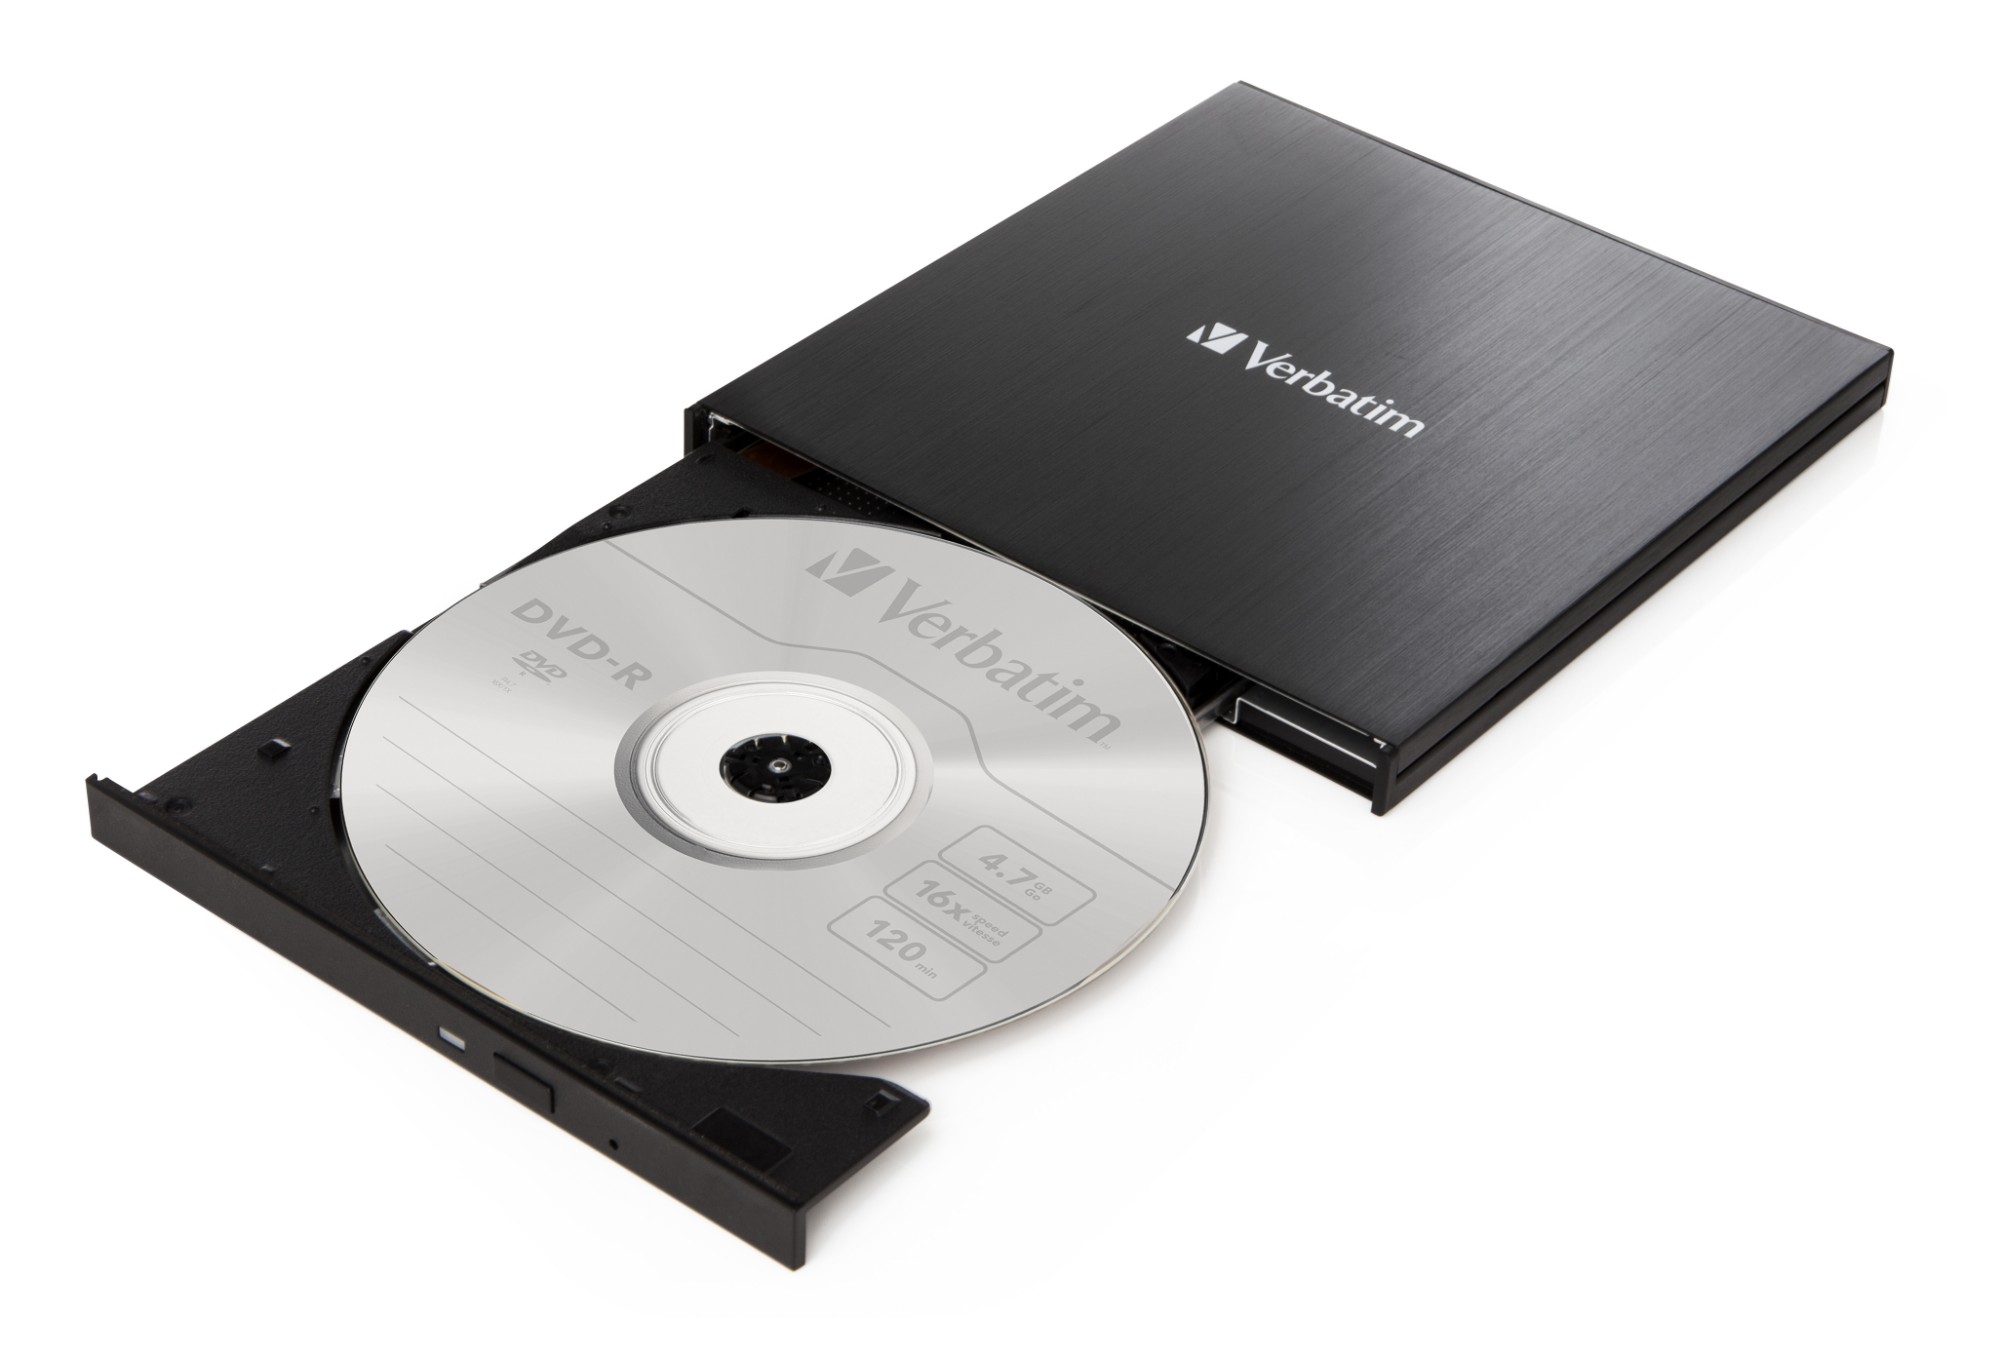 Verbatim 43886 optical disc drive DVD±RW Black